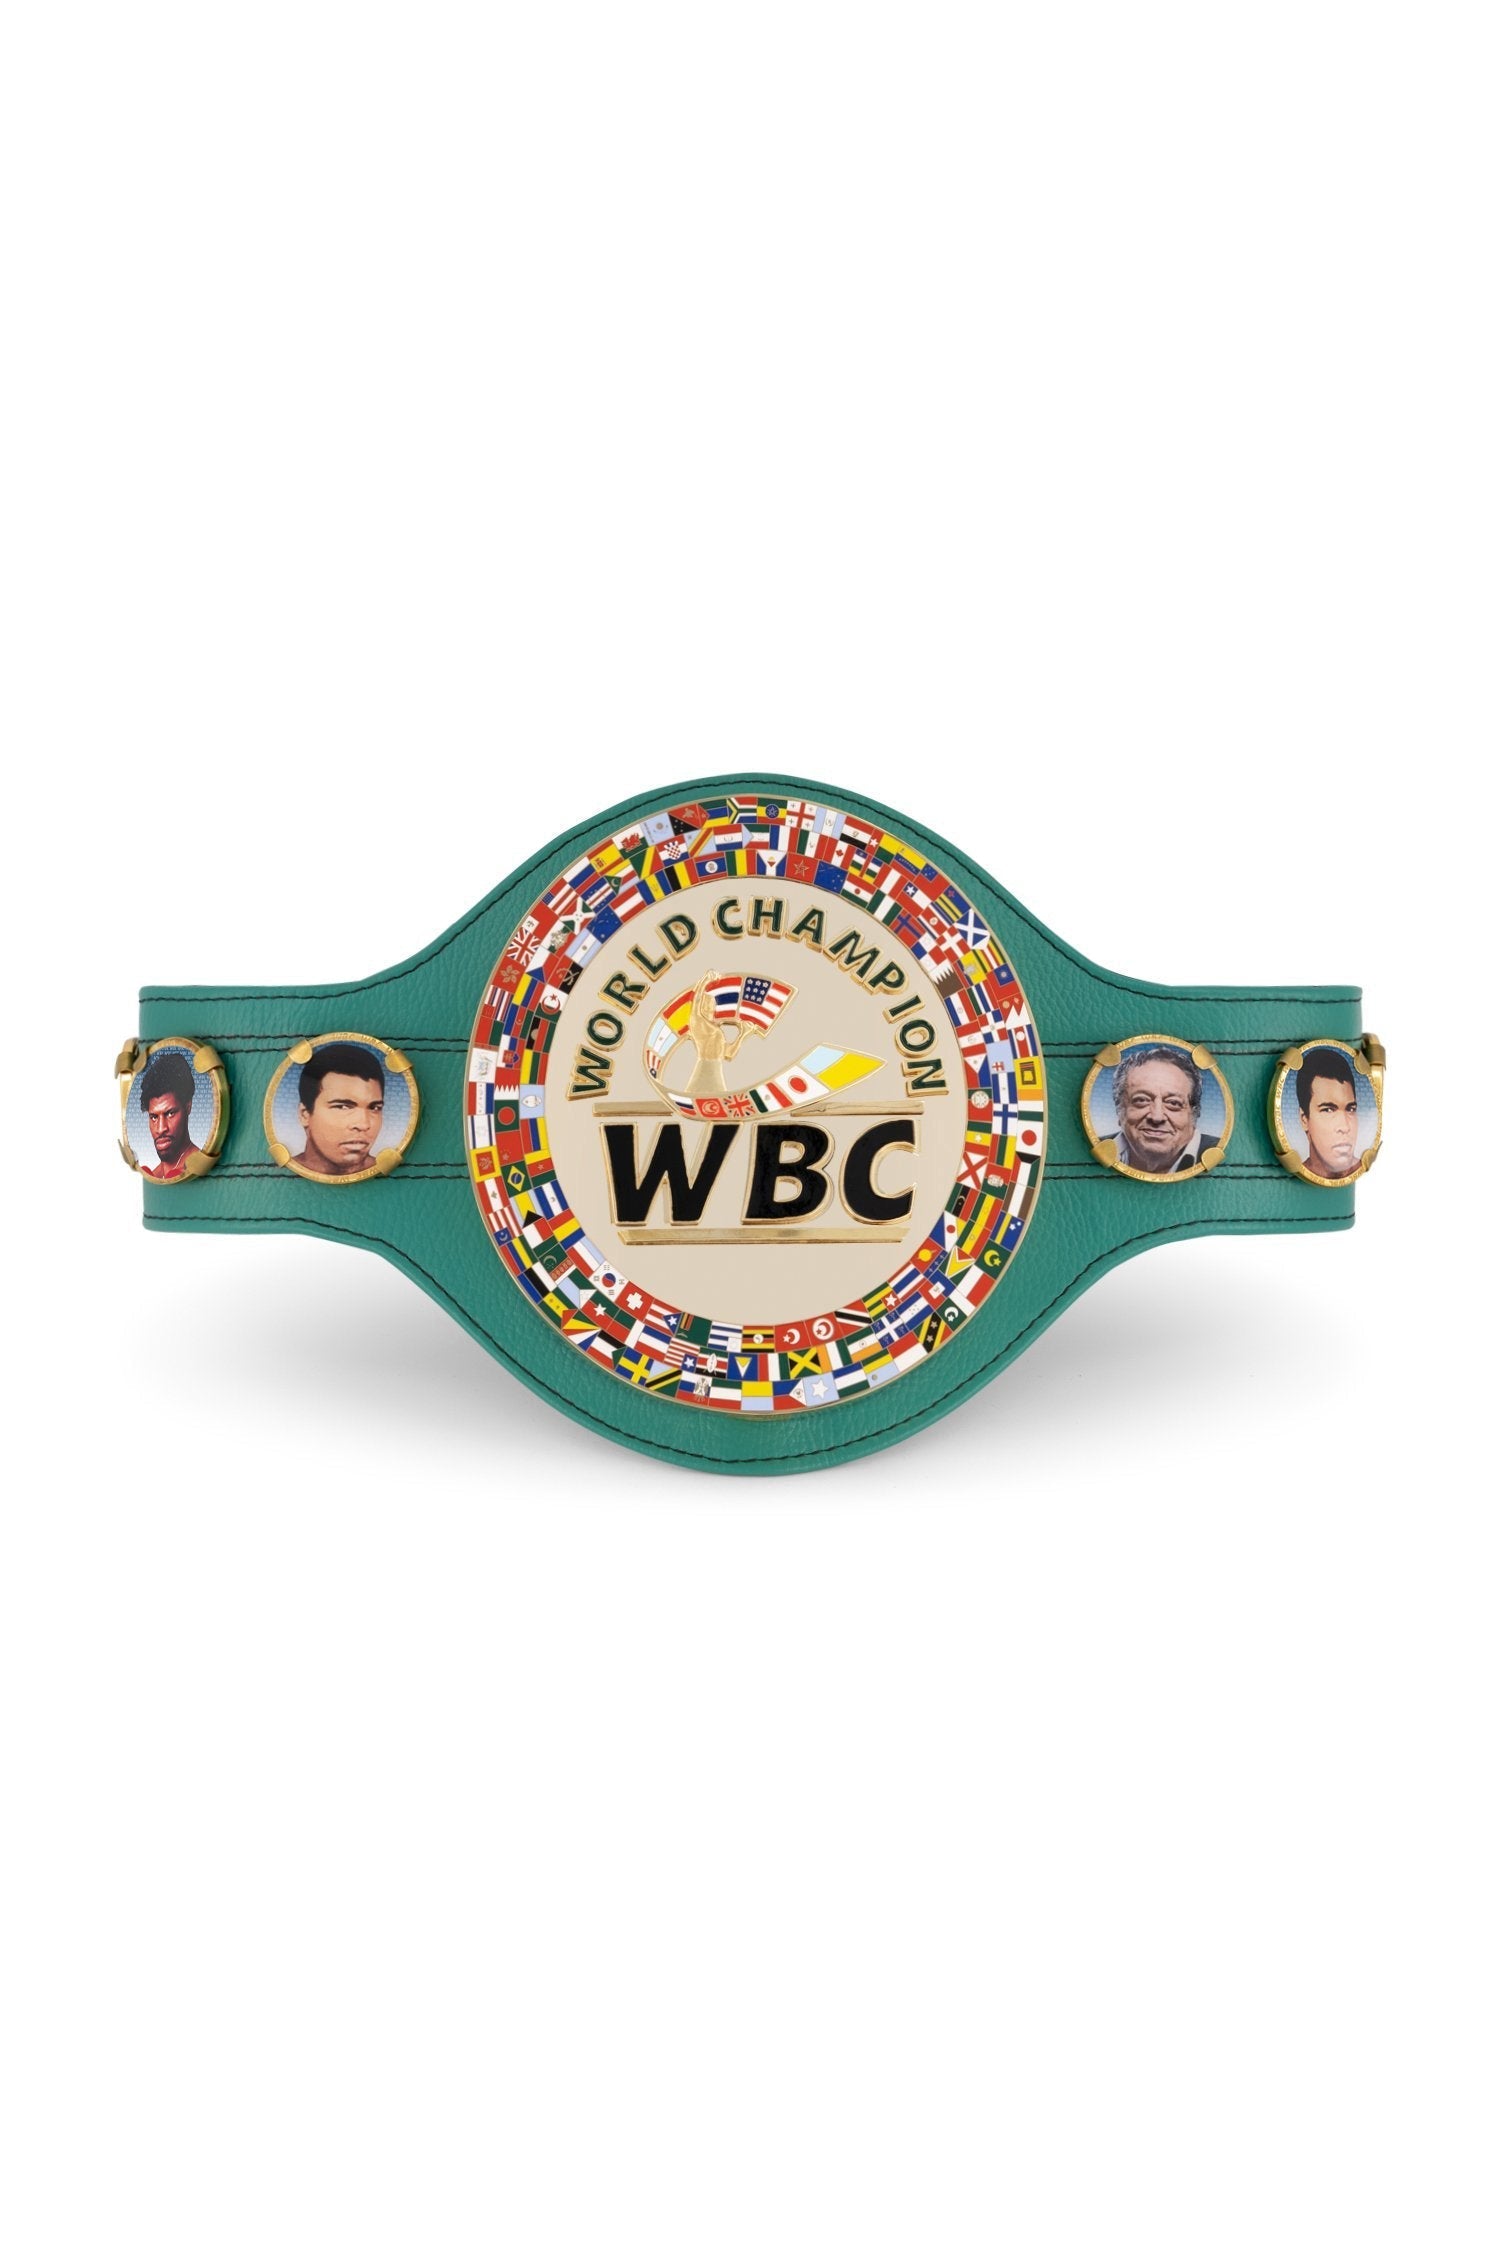 WBC Store WBC - Championship Belt "In Honor to Muhammad Ali Collection" Muhammad Ali vs. Leon Spinks II